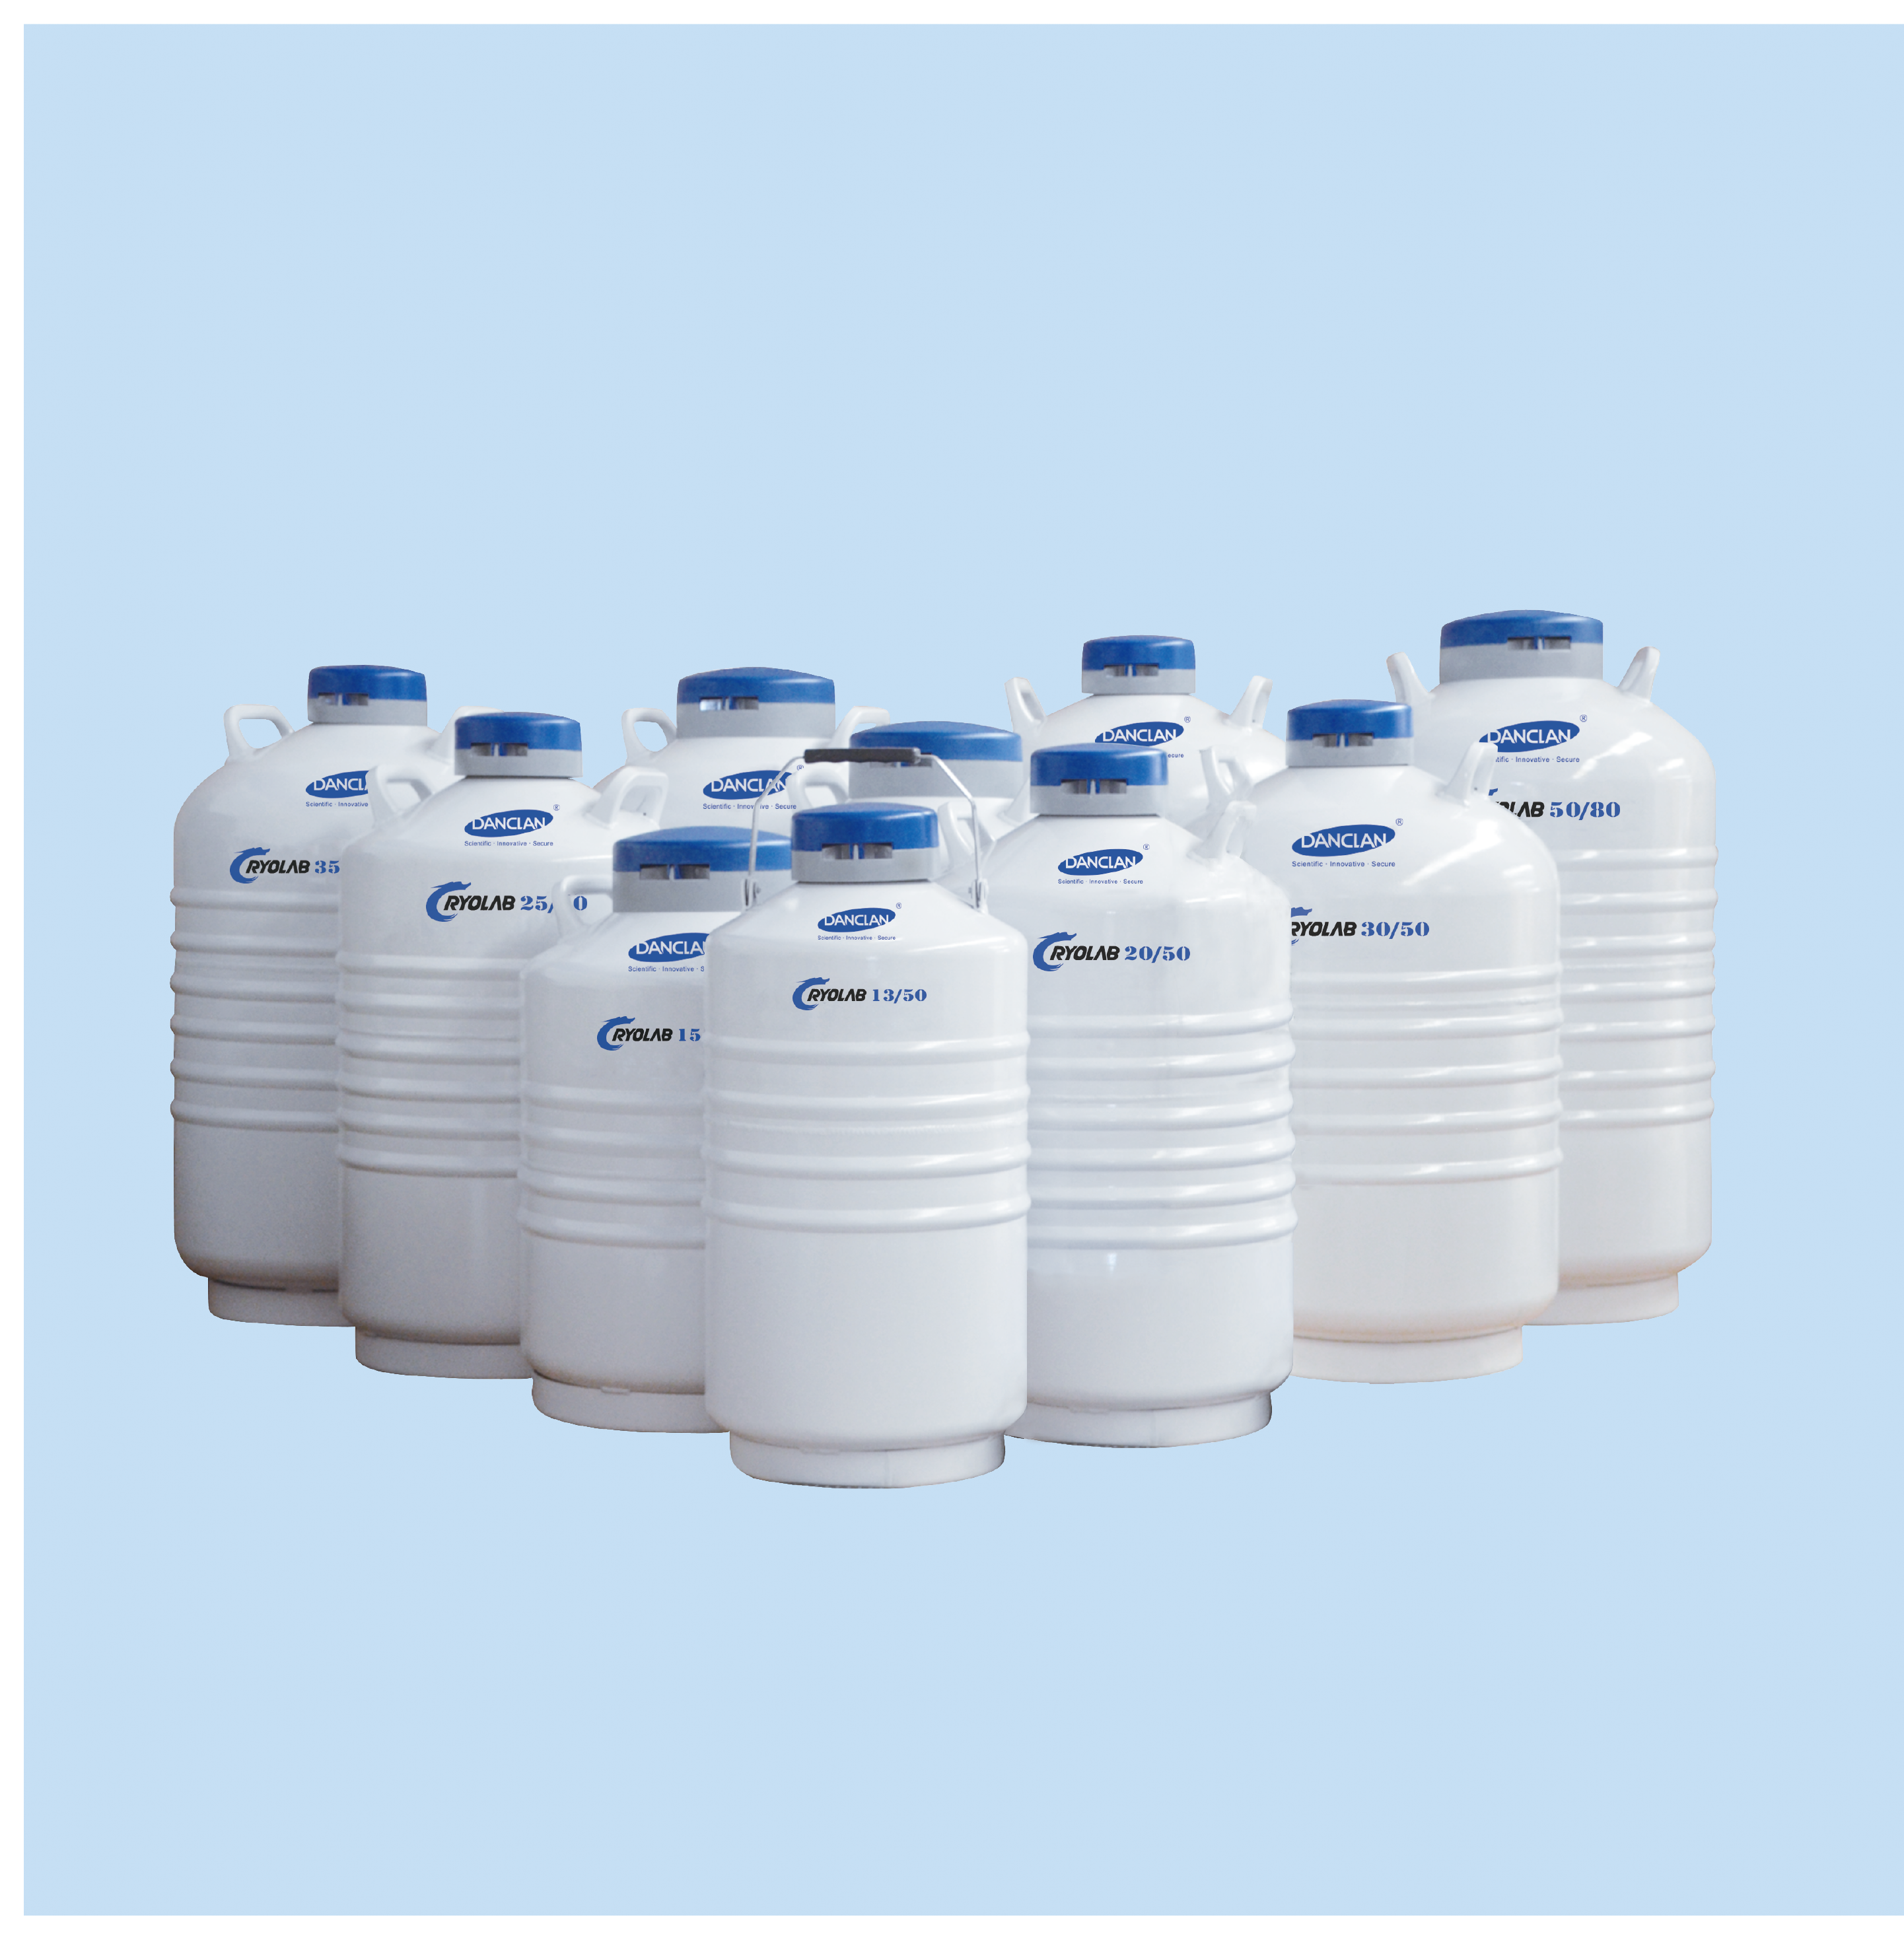 Danclan Cryolab Series Liquid Nitrogen Tank